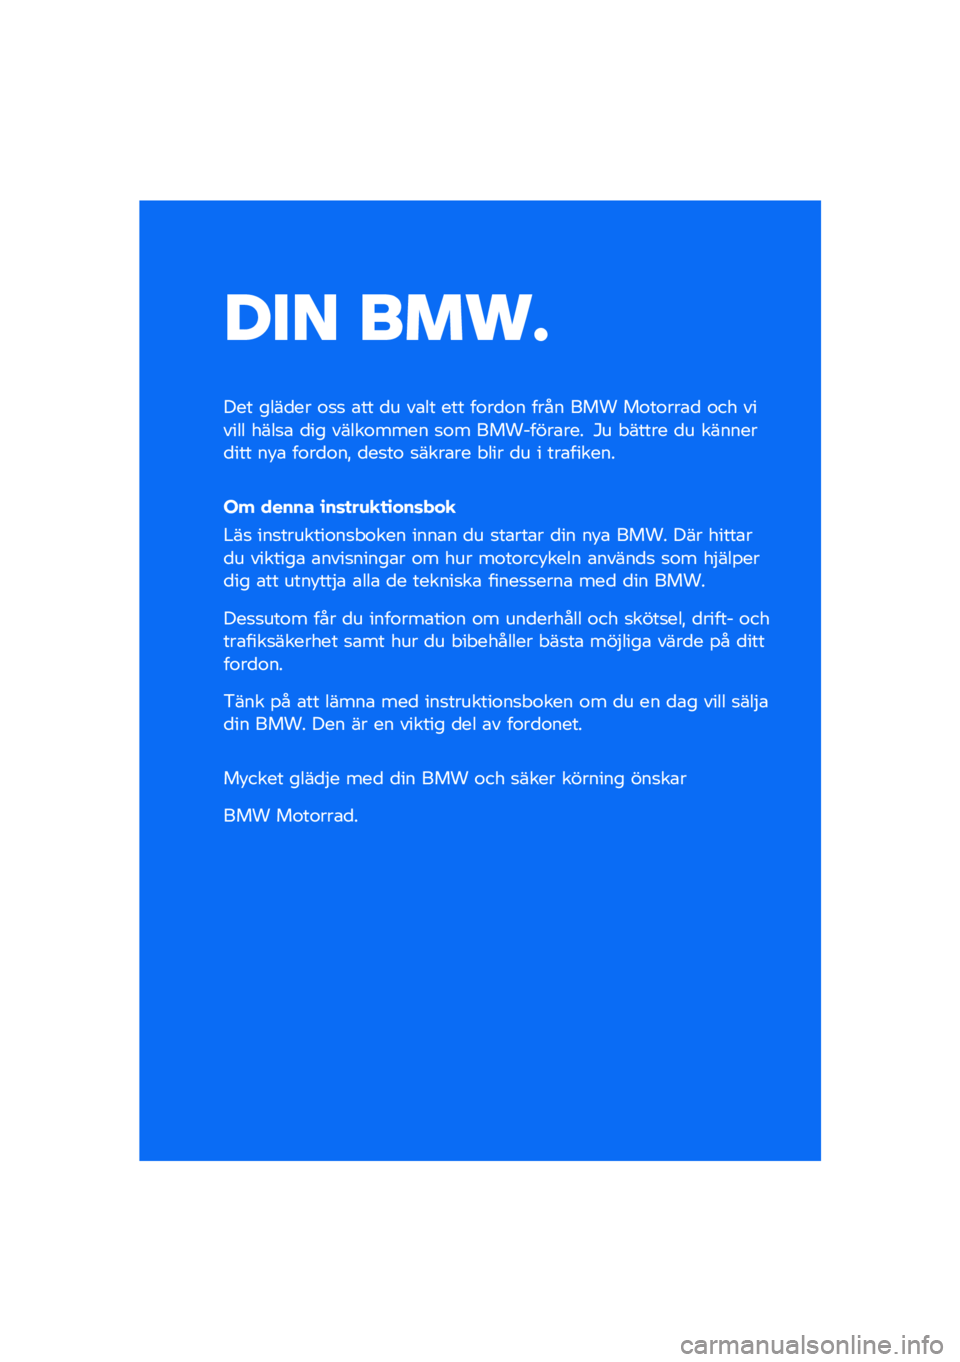 BMW MOTORRAD R NINE T 2021  Instruktionsbok (in Swedish) ��� ����\b
��� ����
�� �\f�
�
 �\b�� �
� ��\b�� ��� ��\f��
�\f� ���� ��� ��\f��\f���\b�
 �\f�� ������ ����
�\b �
�� �����\f���� �
�\f� ���